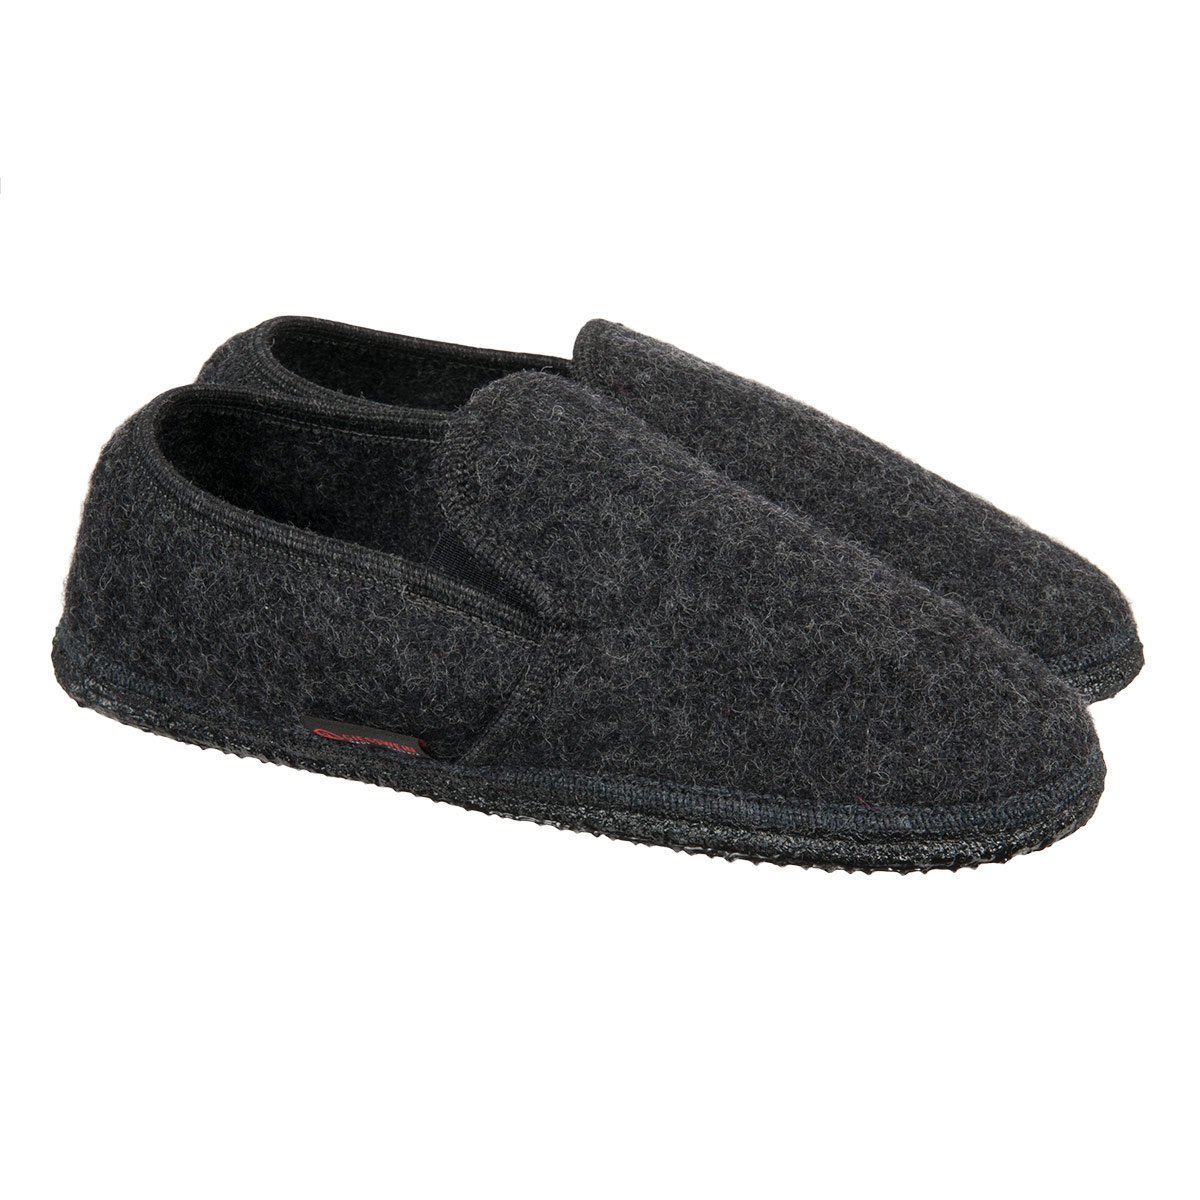 giesswein boiled wool slippers